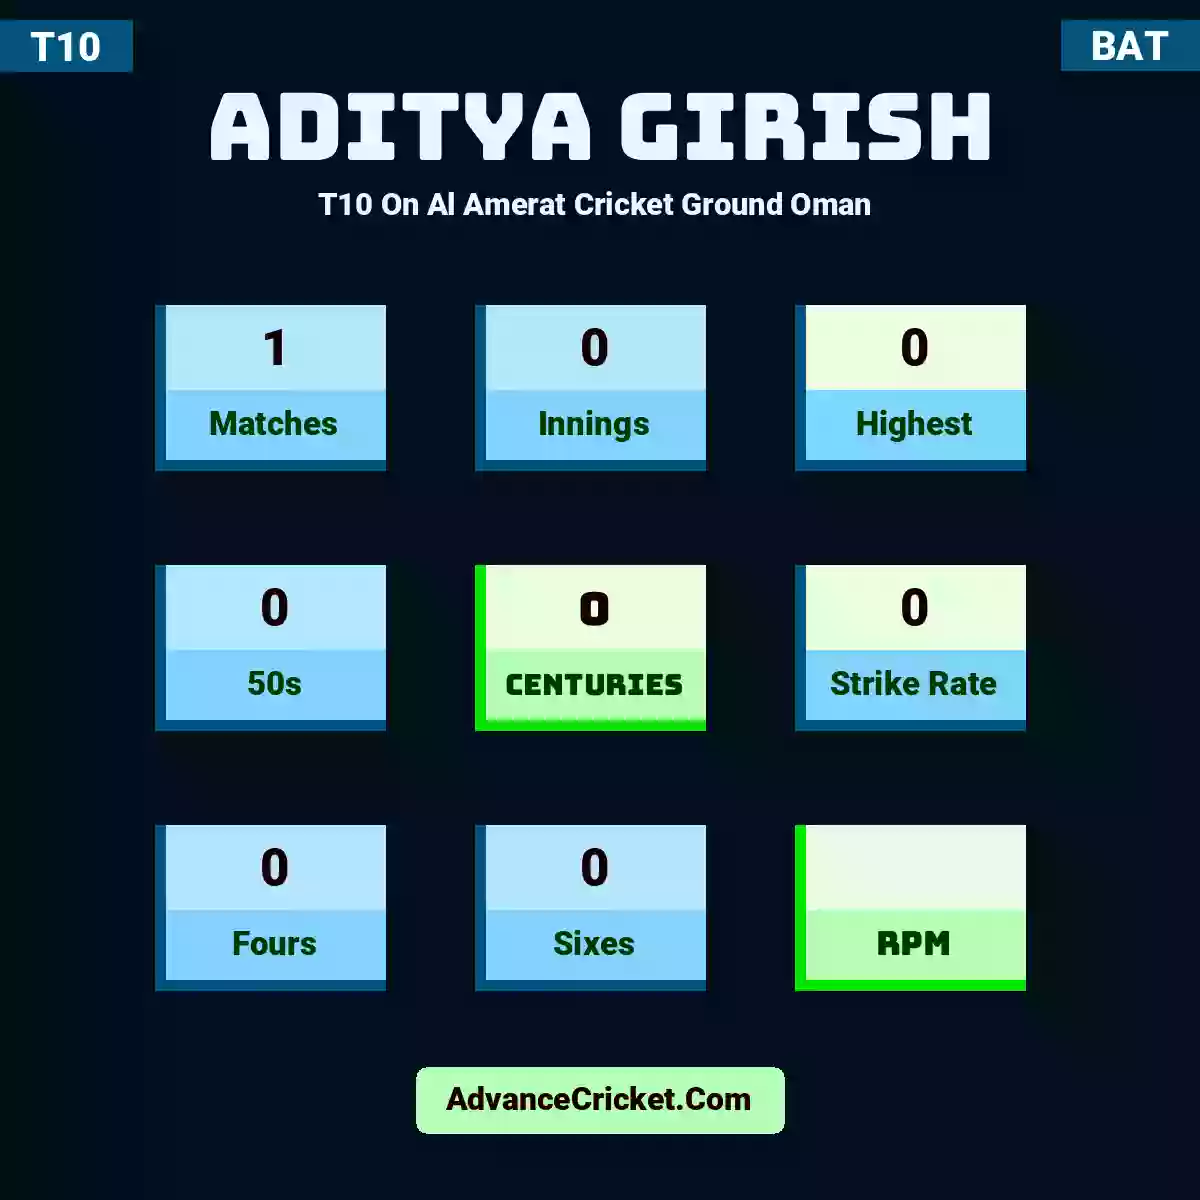 Aditya Girish T10  On Al Amerat Cricket Ground Oman , Aditya Girish played 1 matches, scored 0 runs as highest, 0 half-centuries, and 0 centuries, with a strike rate of 0. A.Girish hit 0 fours and 0 sixes.